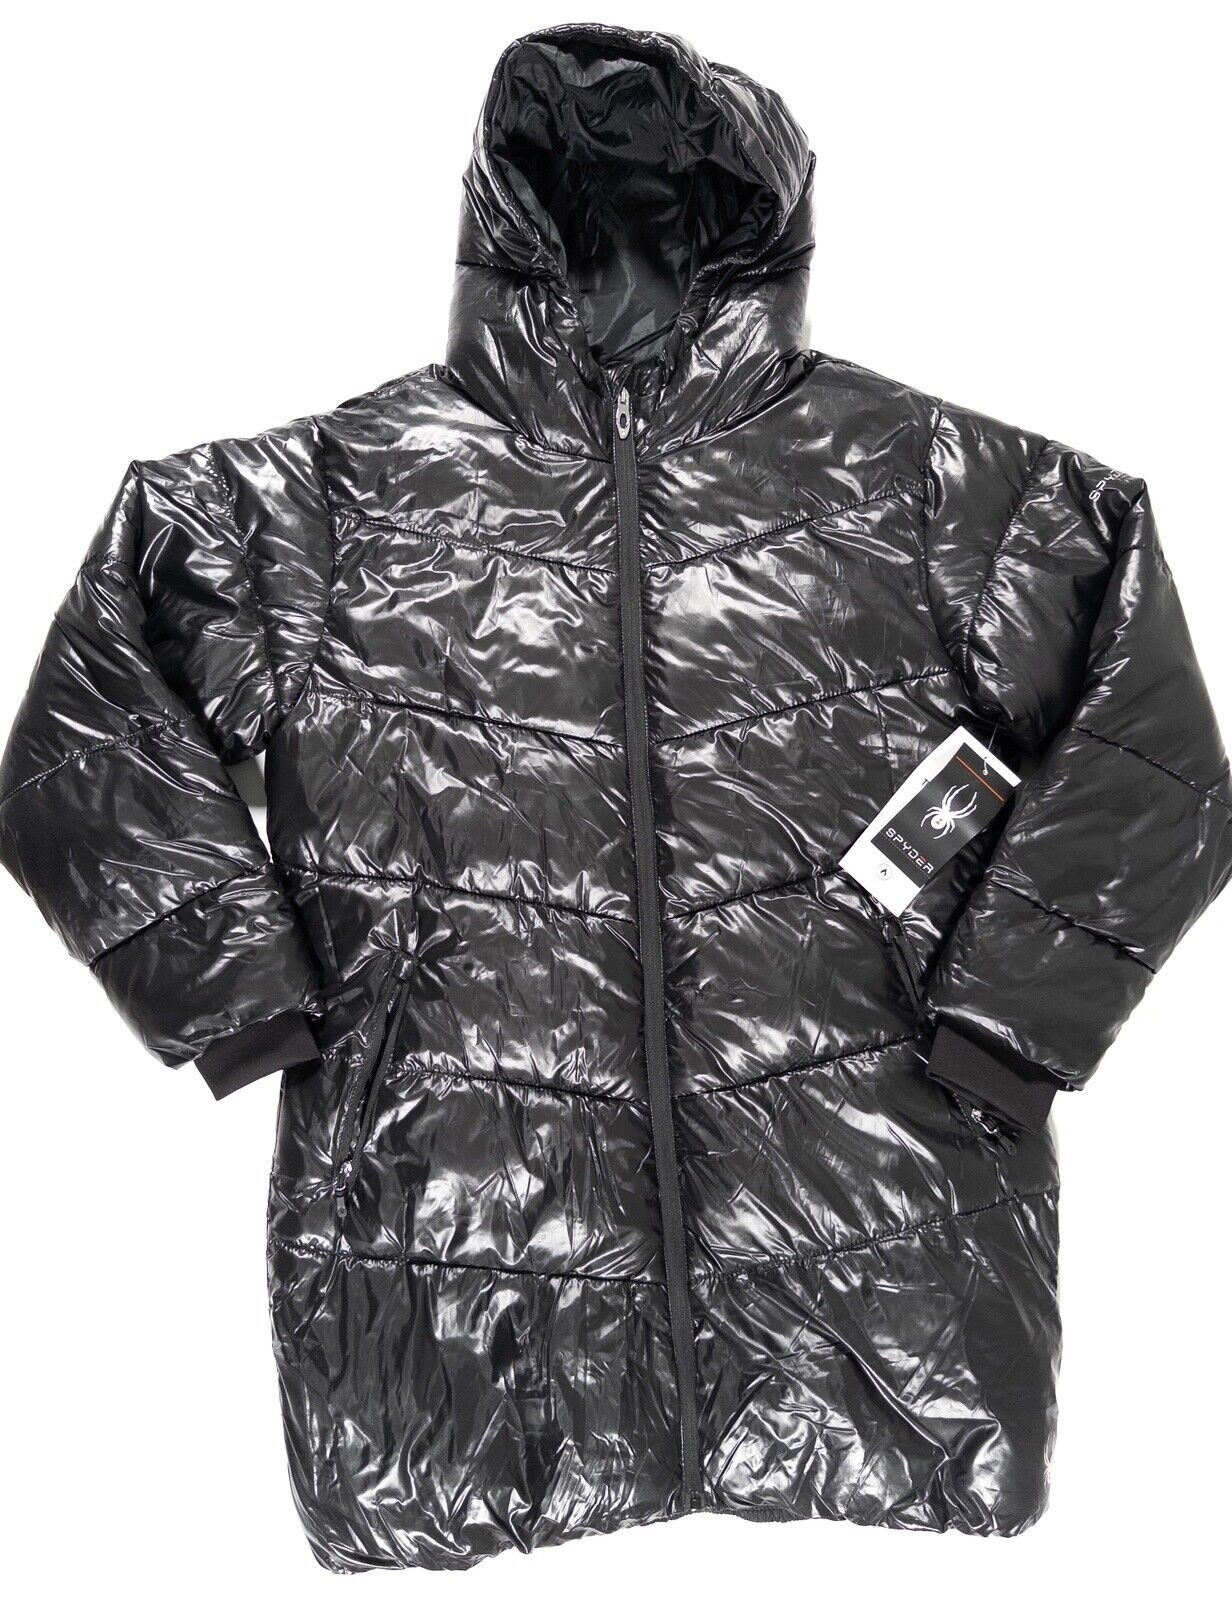 SPYDER Women's Black High Shine Puffer Jacket Coat Size UK Medium